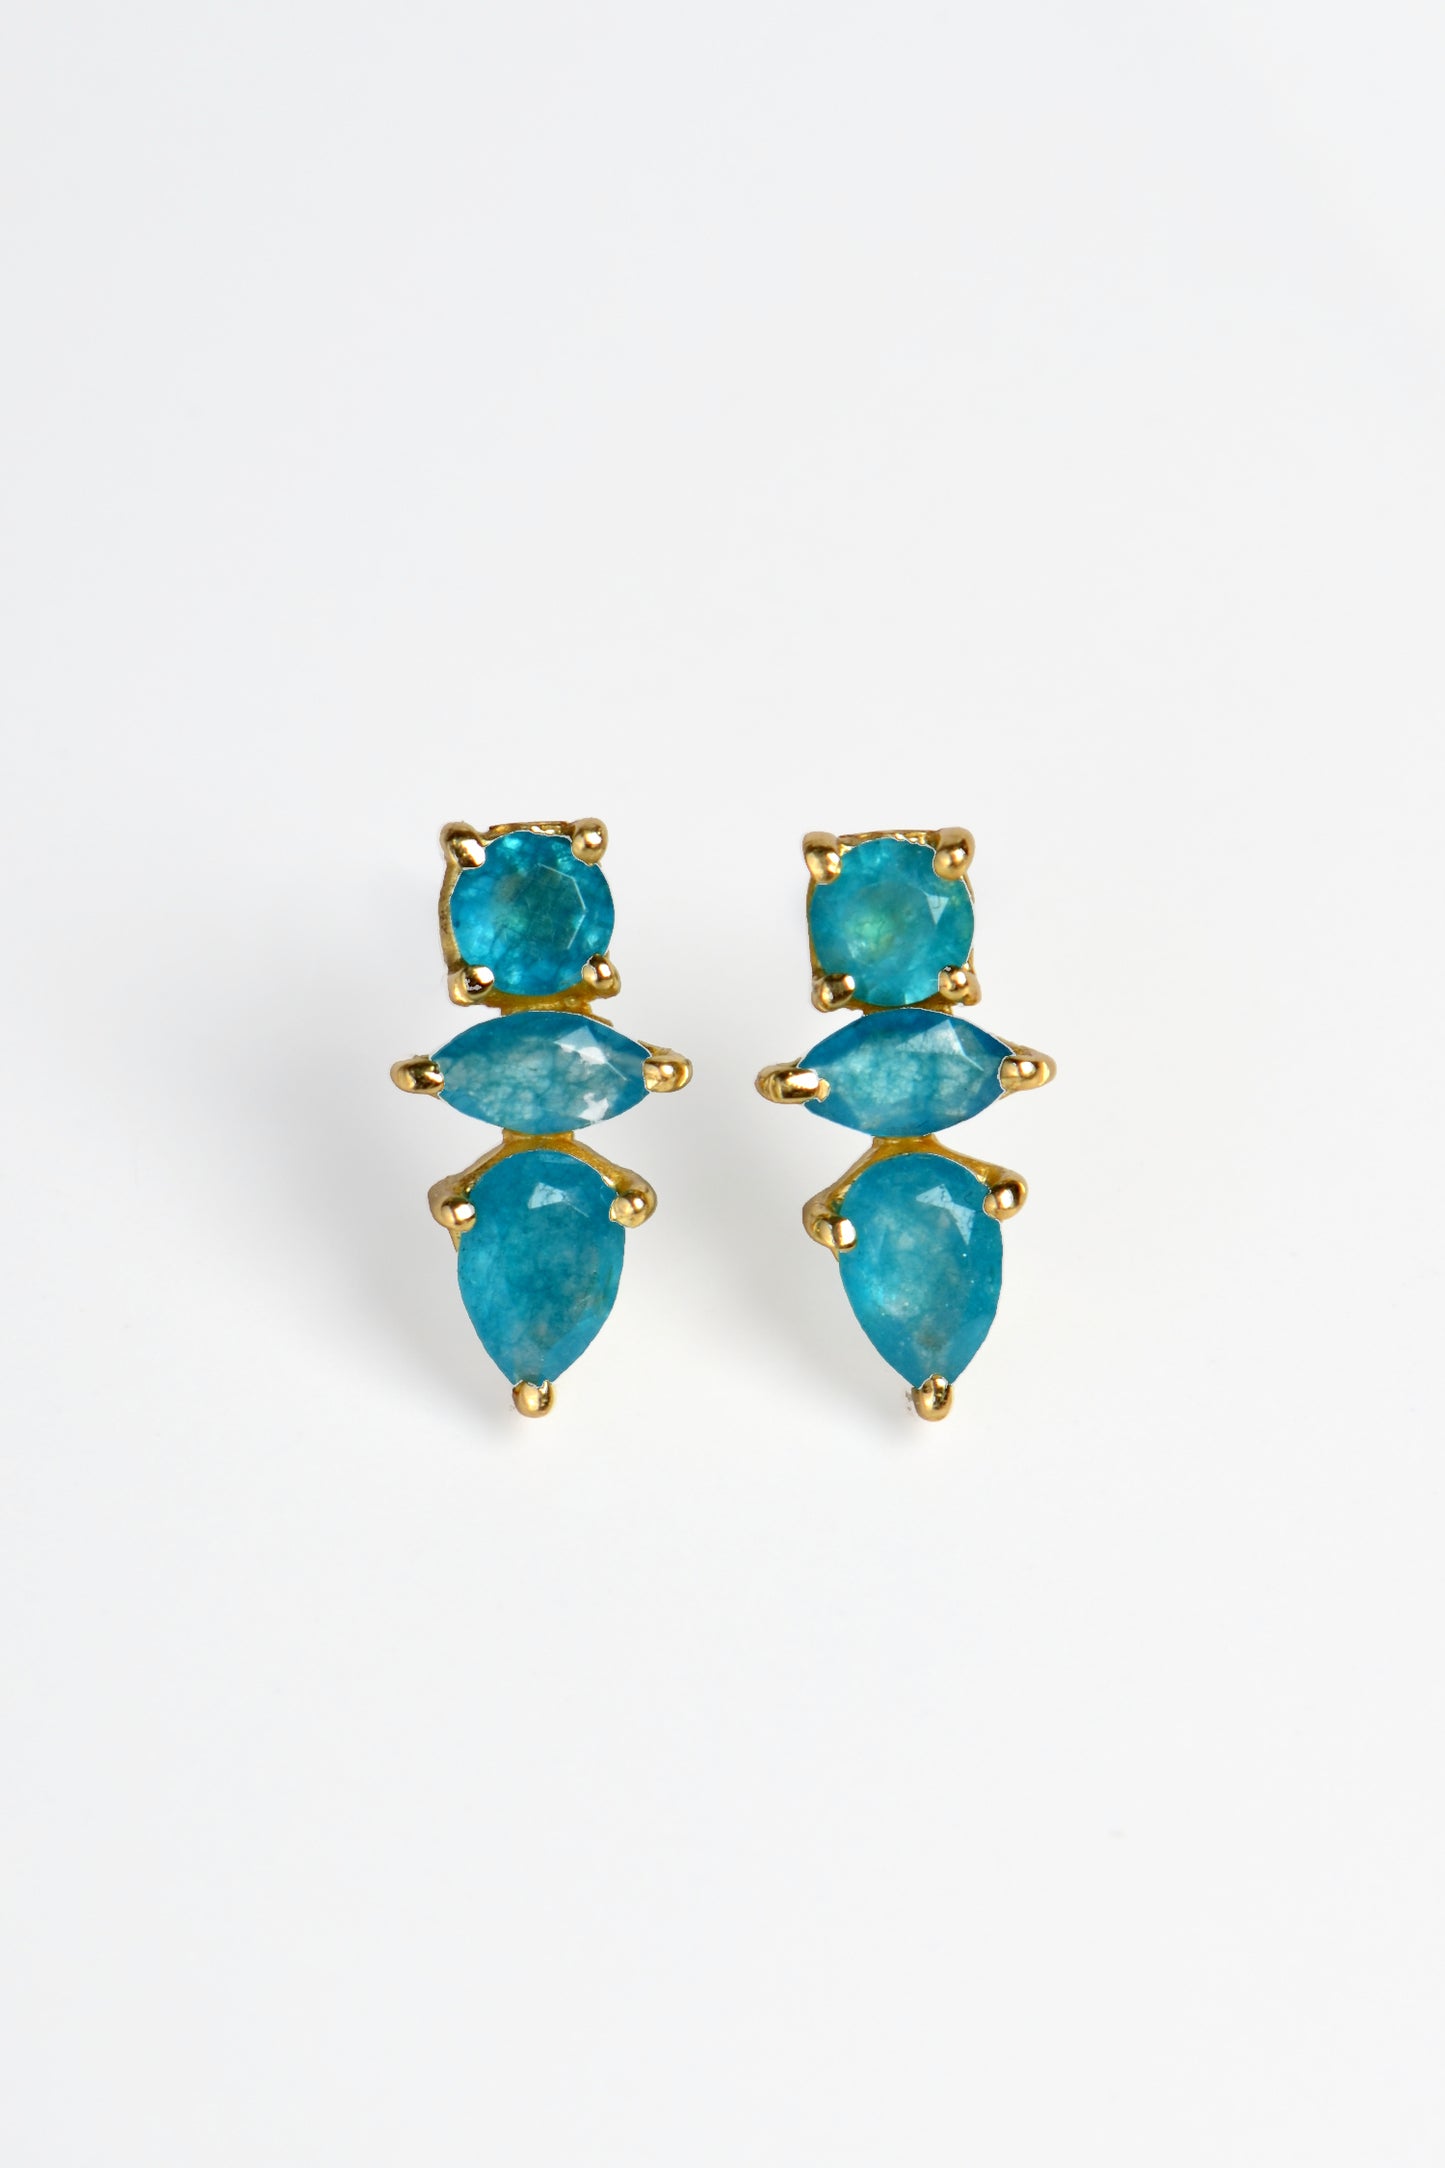 teal blue earrings with stacked gemstones